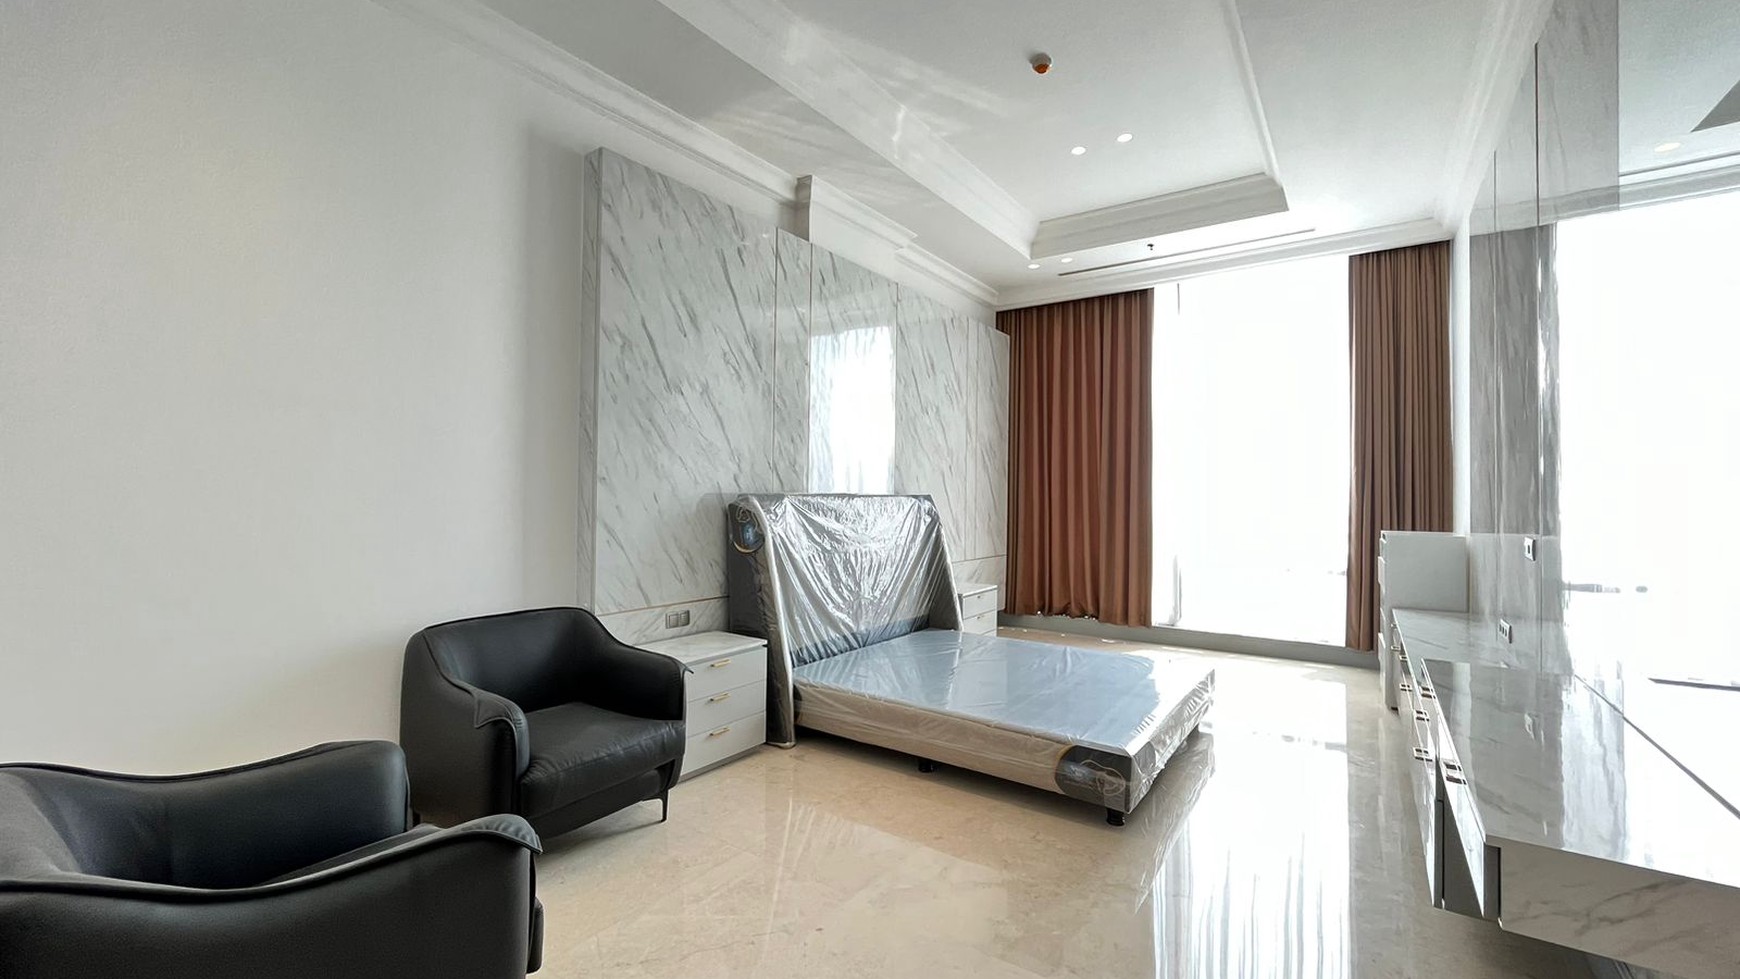 For Rent Raffles Residence Kuningan, South Jakarta